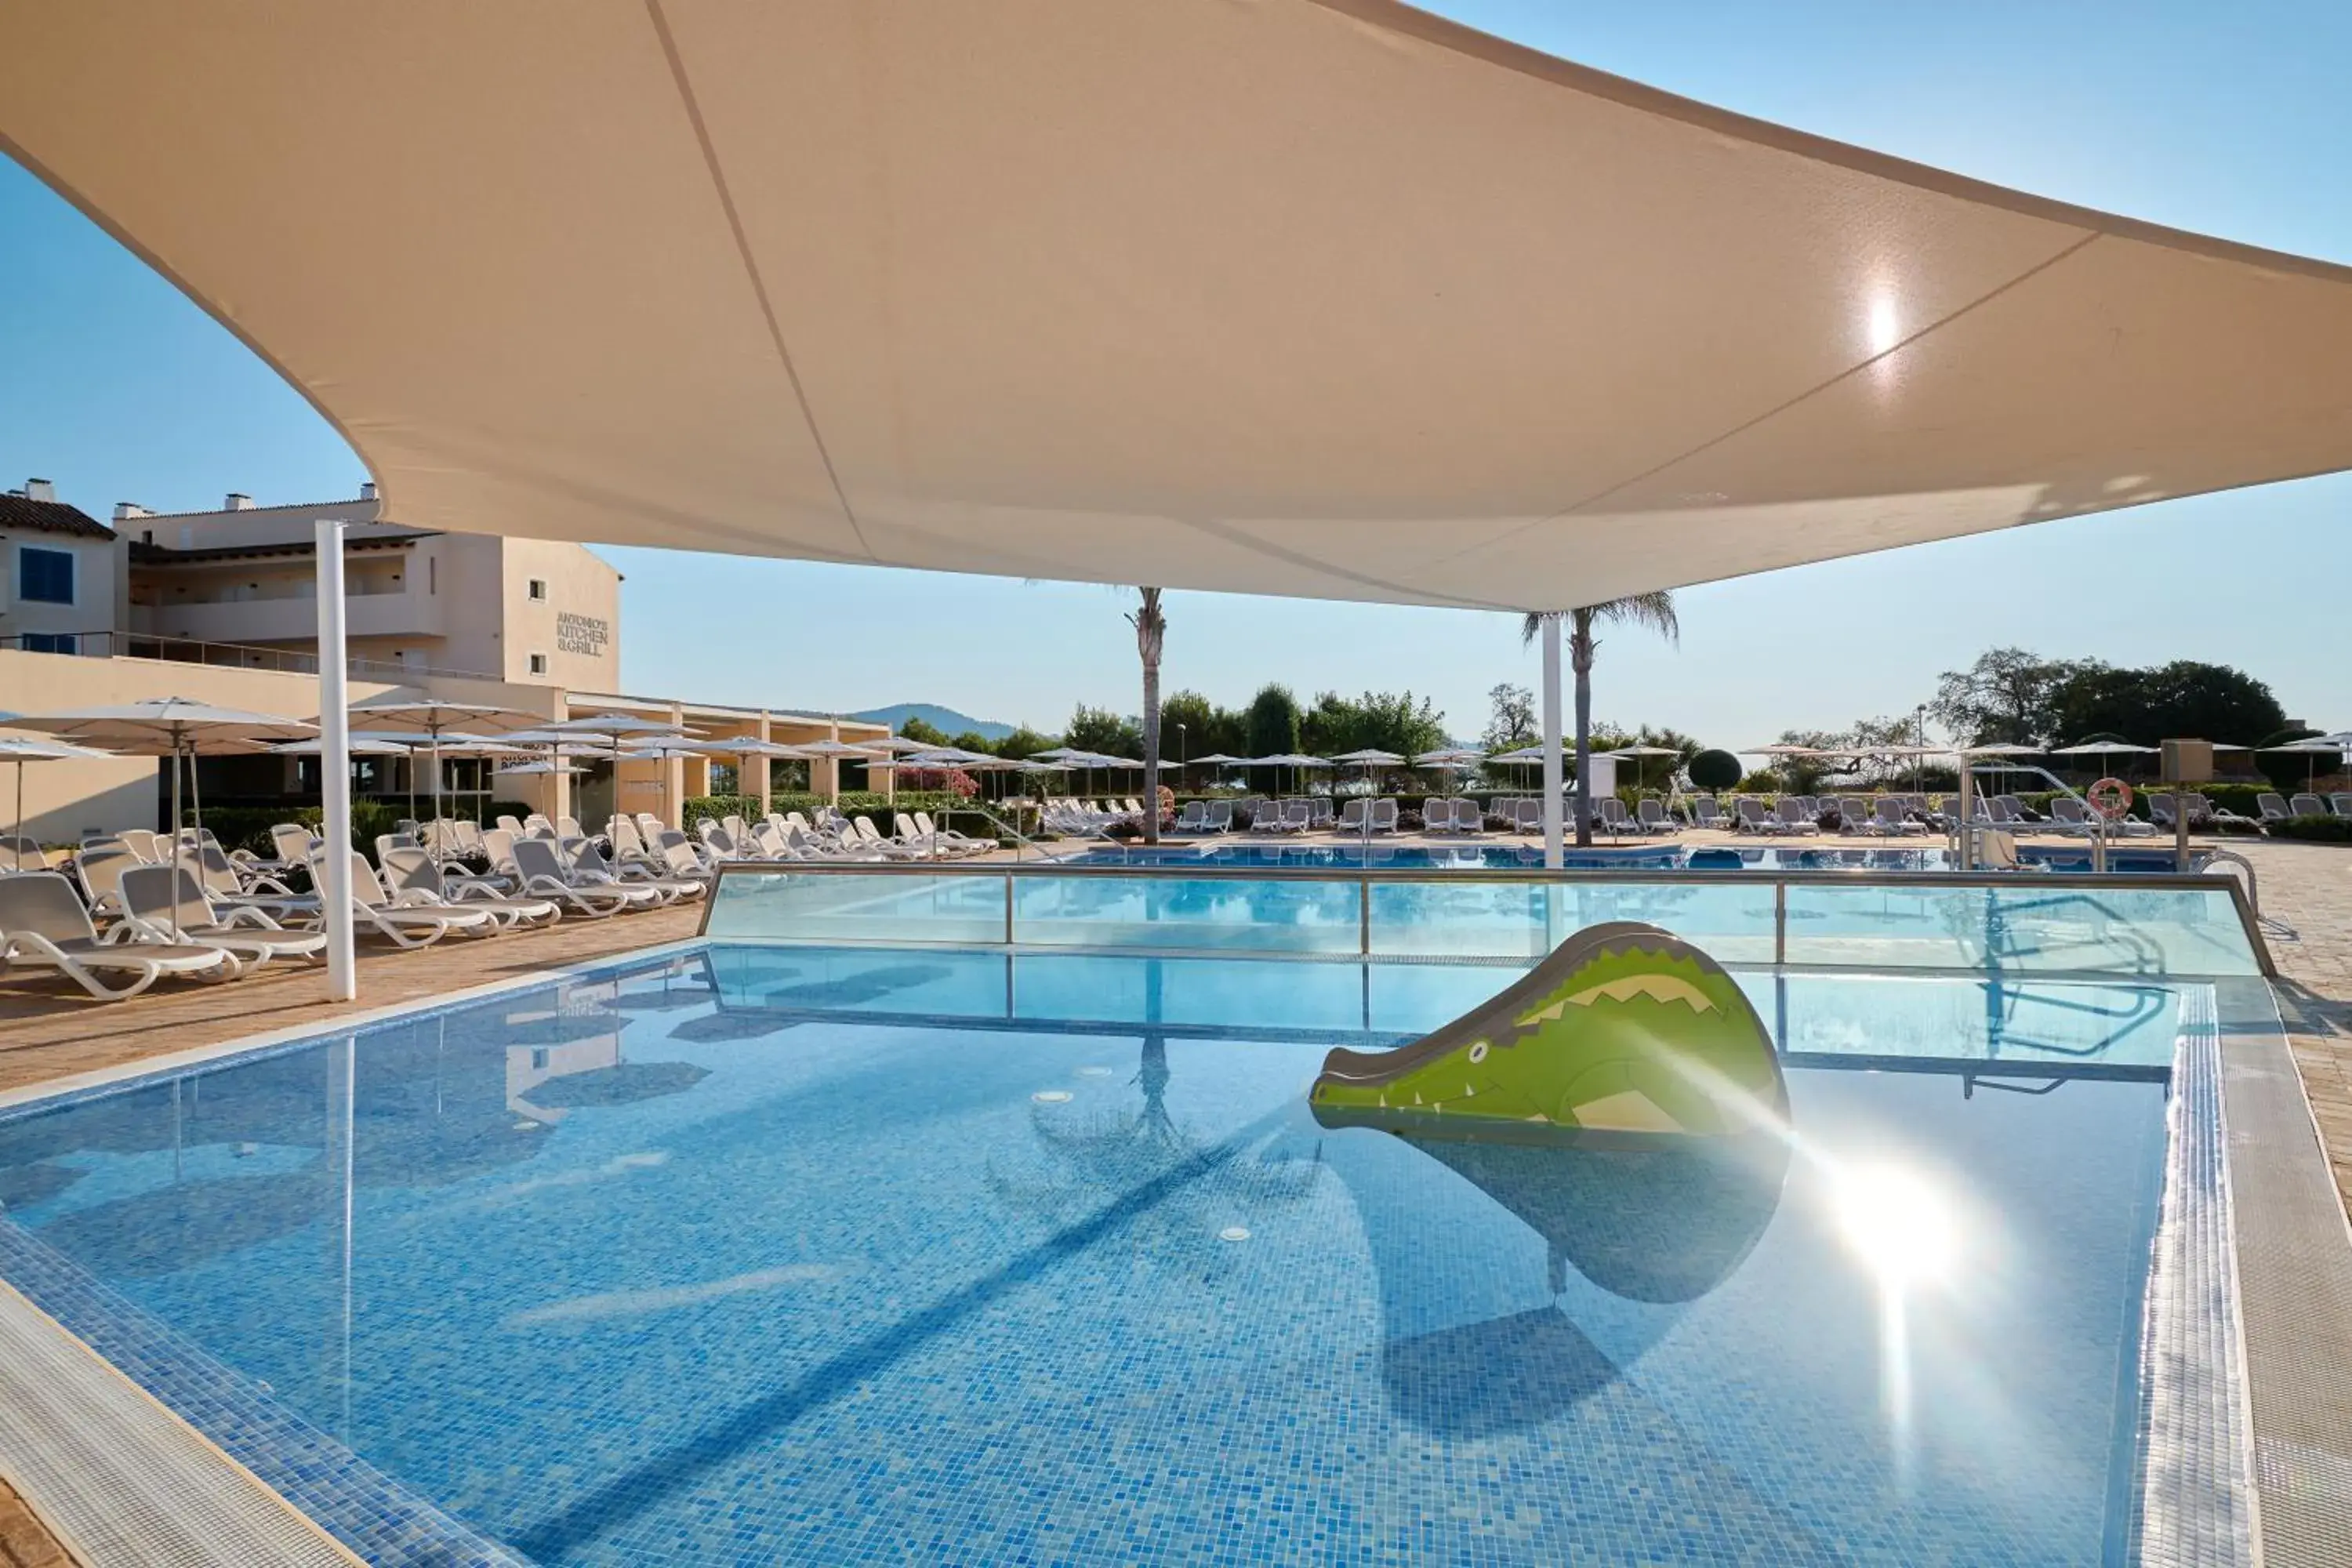 Swimming Pool in Hipotels Cala Bona Club